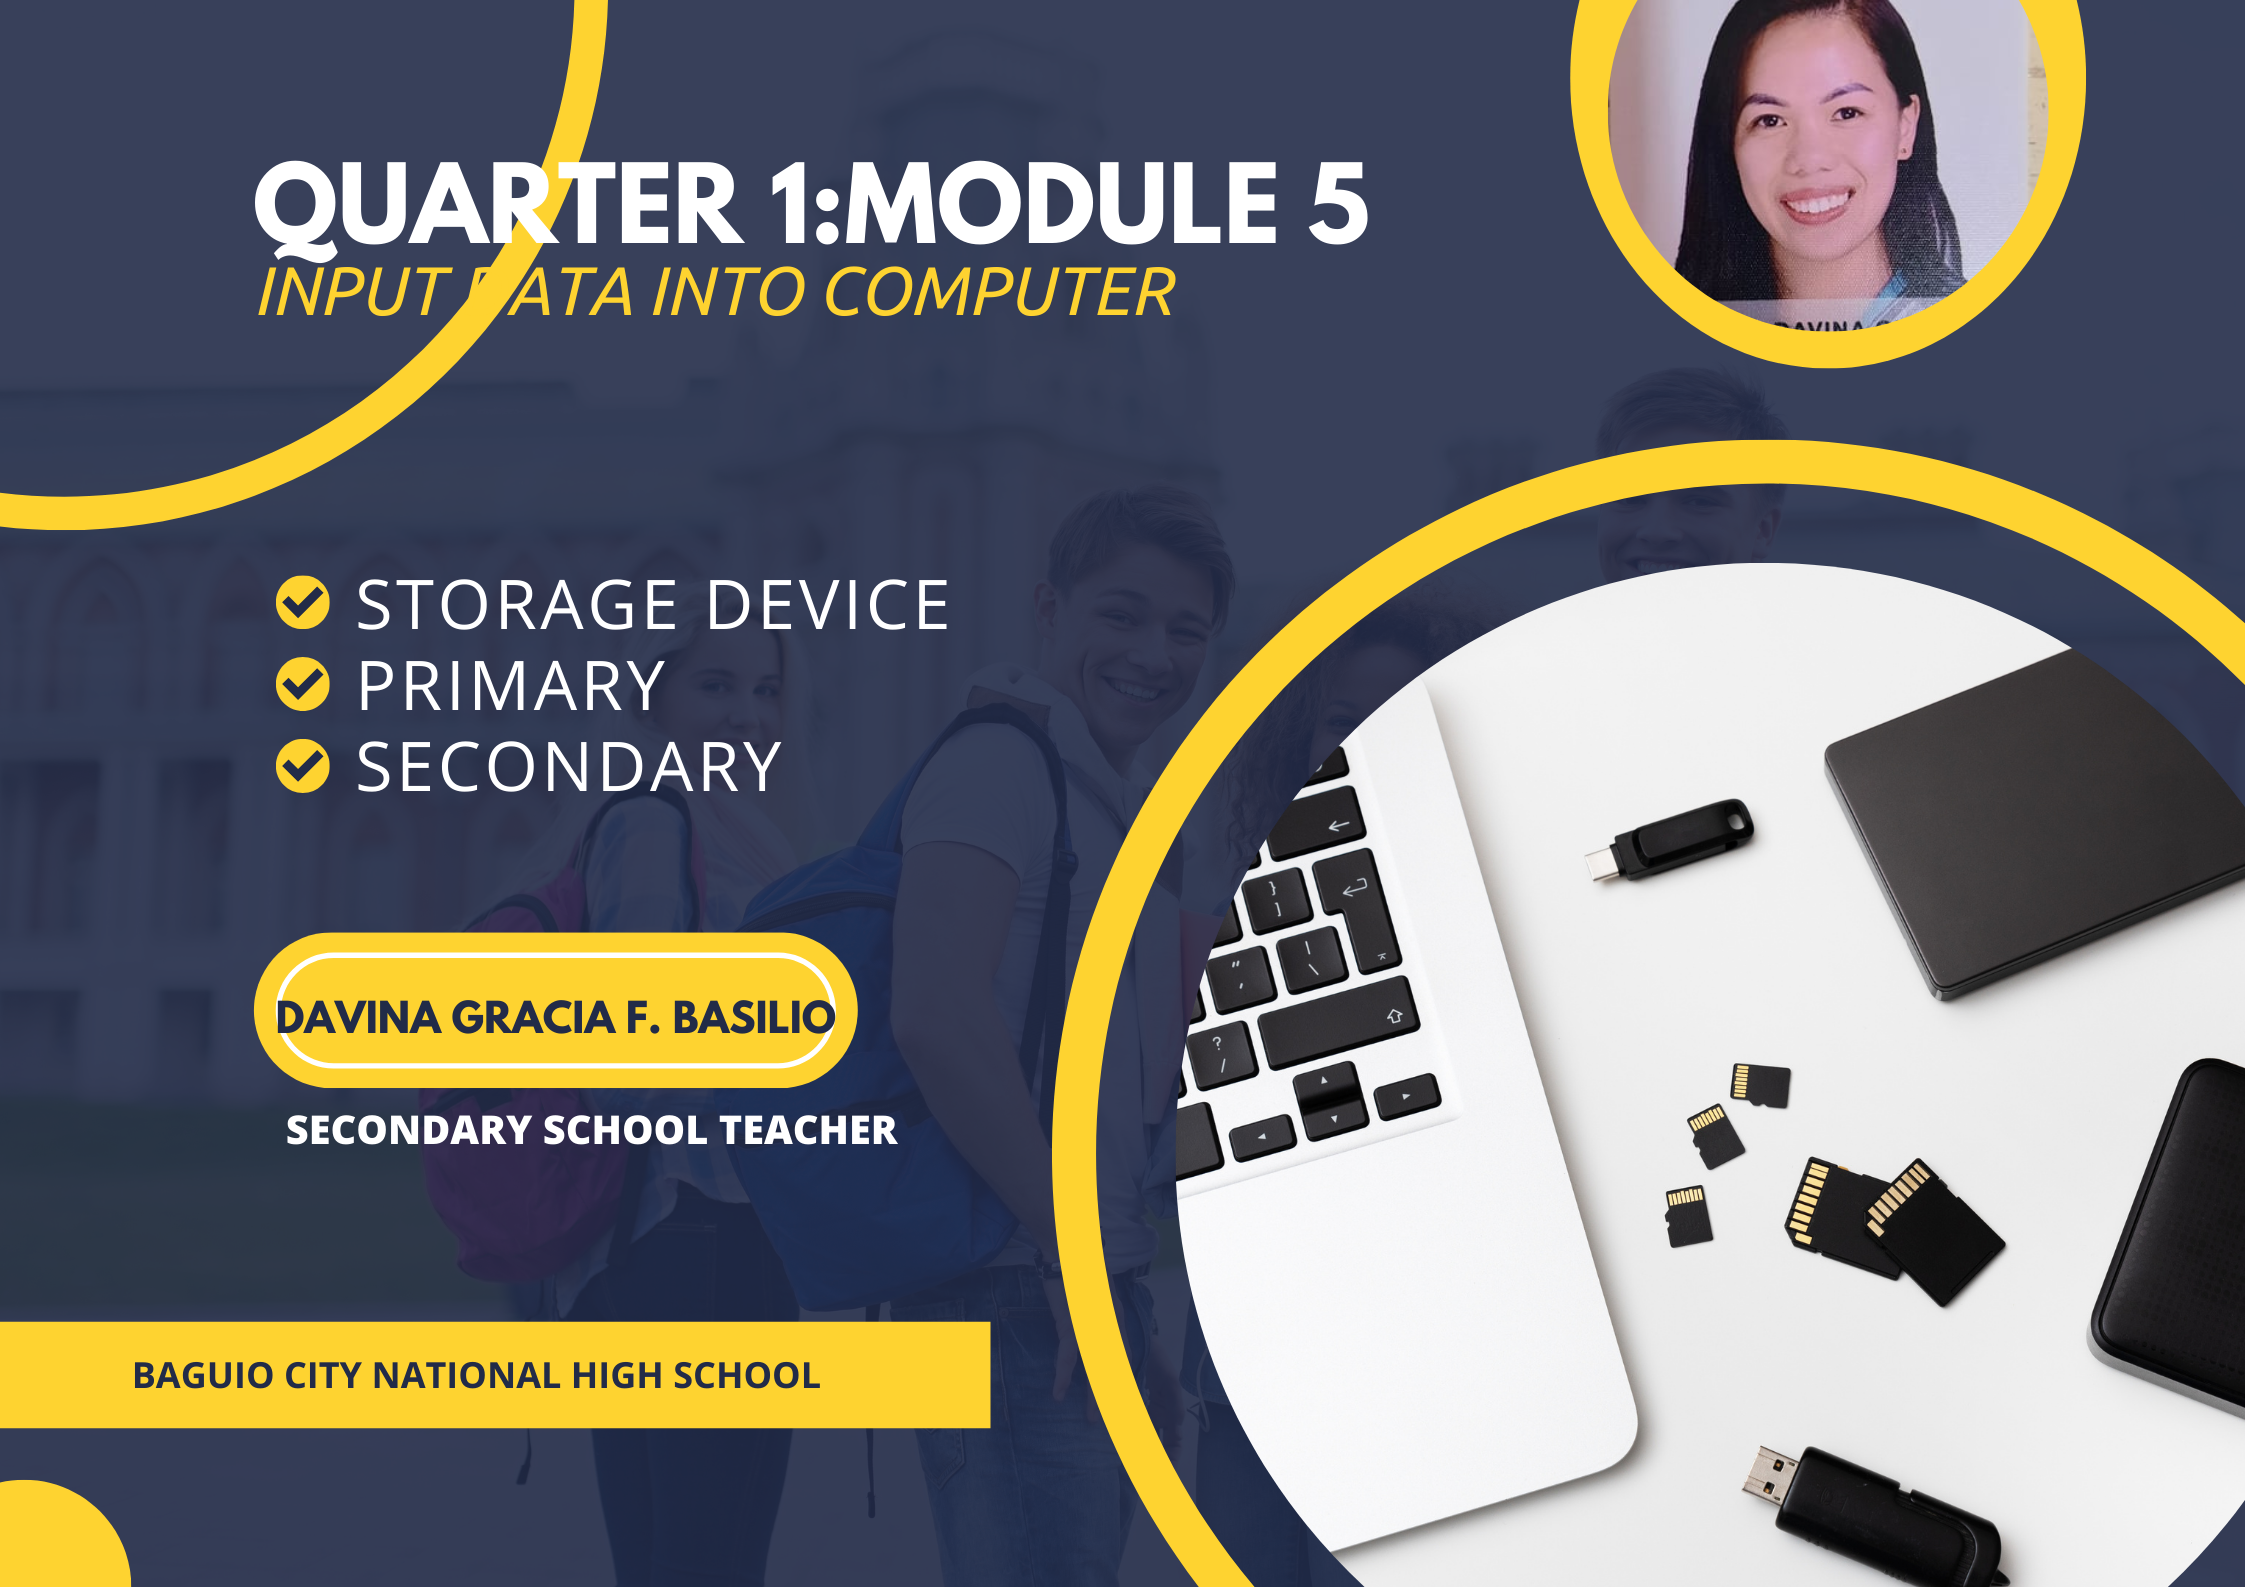 305269-Baguio City National High School-TLE9_CSS_Quarter1_Module5:Input Data Into Computer